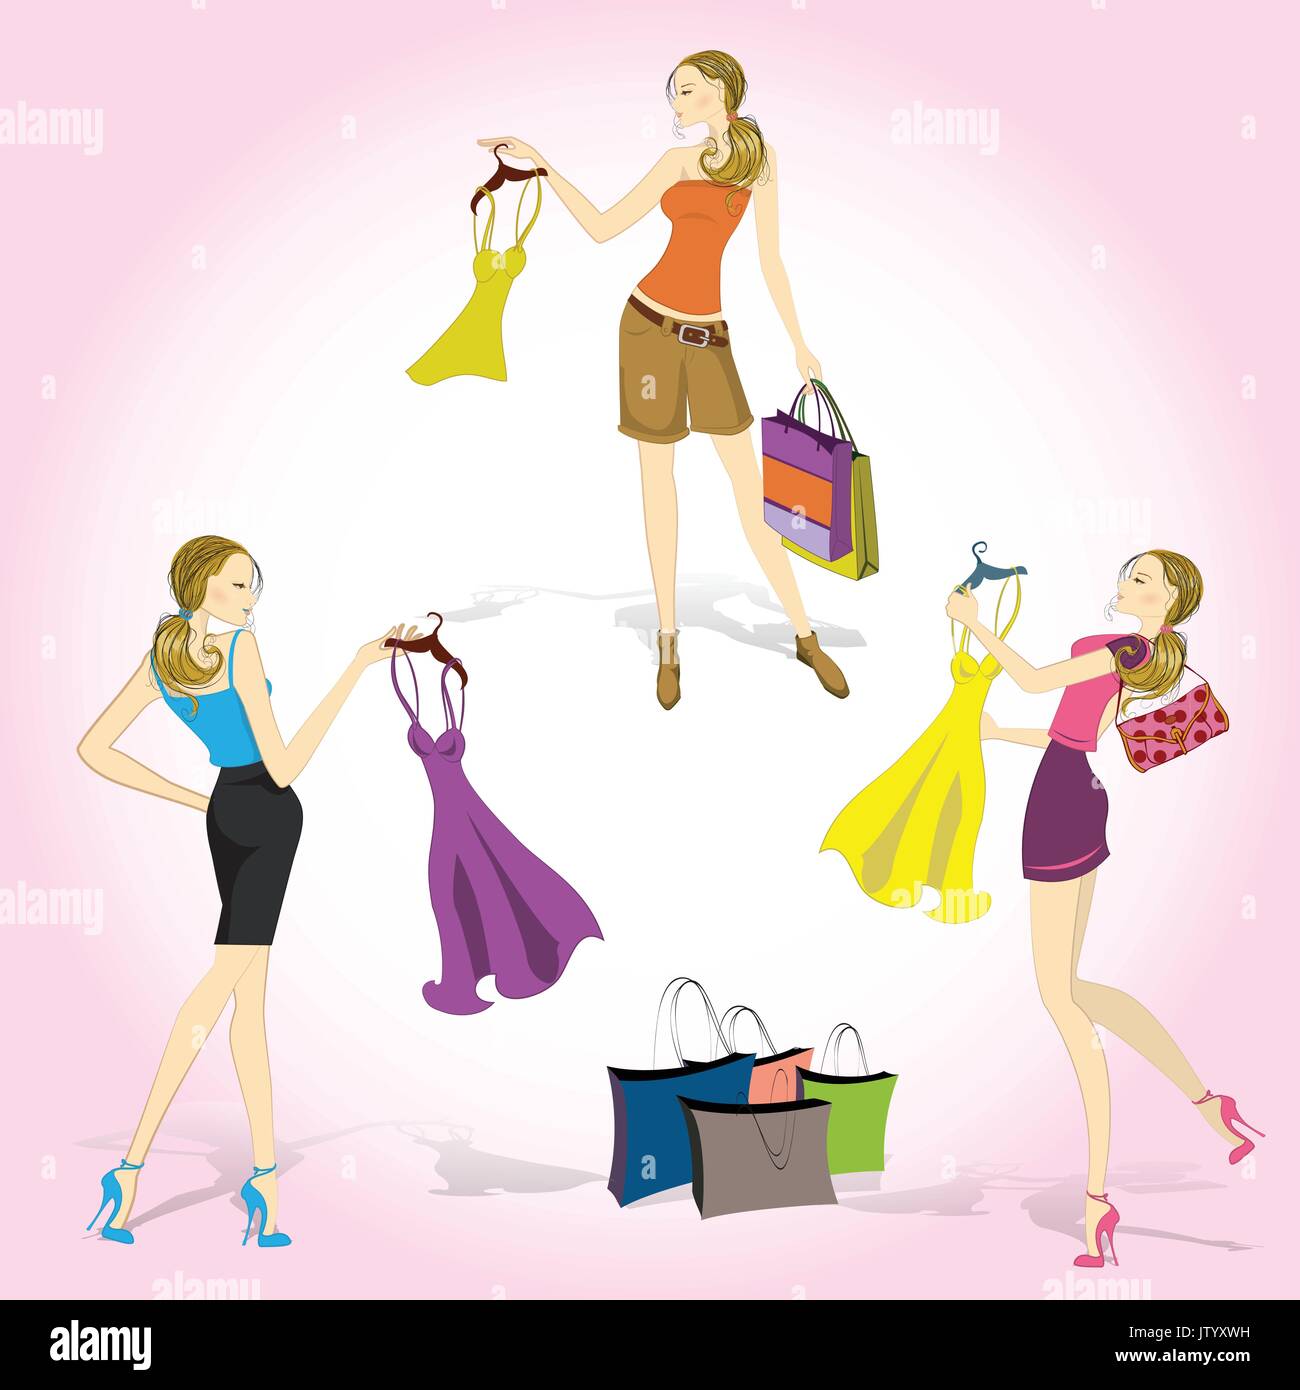 https://c8.alamy.com/comp/JTYXWH/set-pretty-shopping-girls-vector-illustration-JTYXWH.jpg